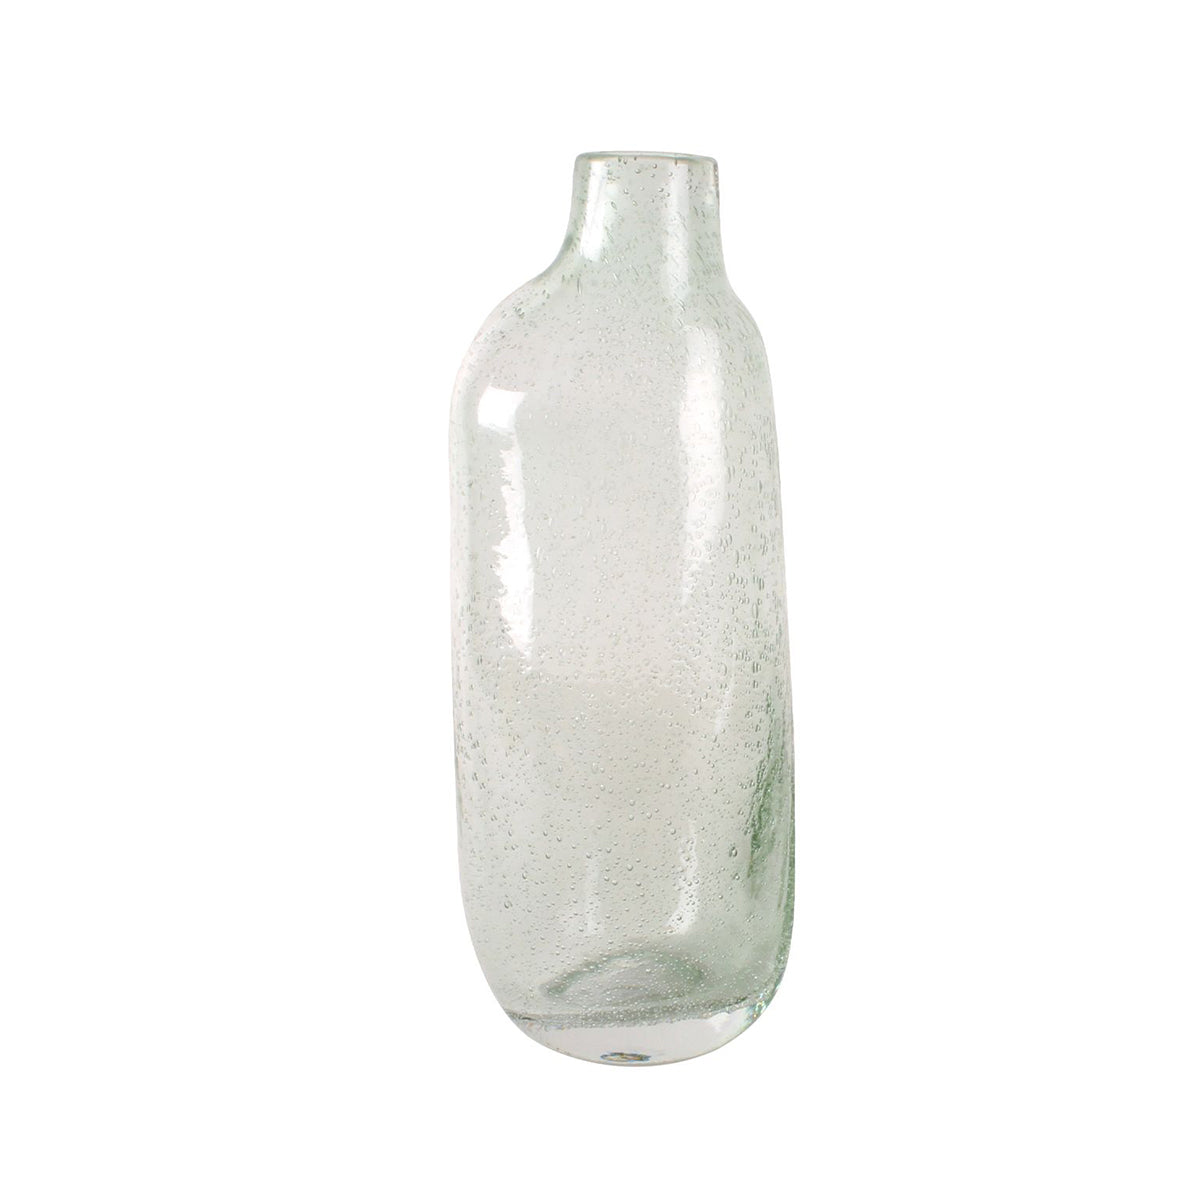 Idan Hand Blown Glass Bottle Vase 27 x 11 x 4cm